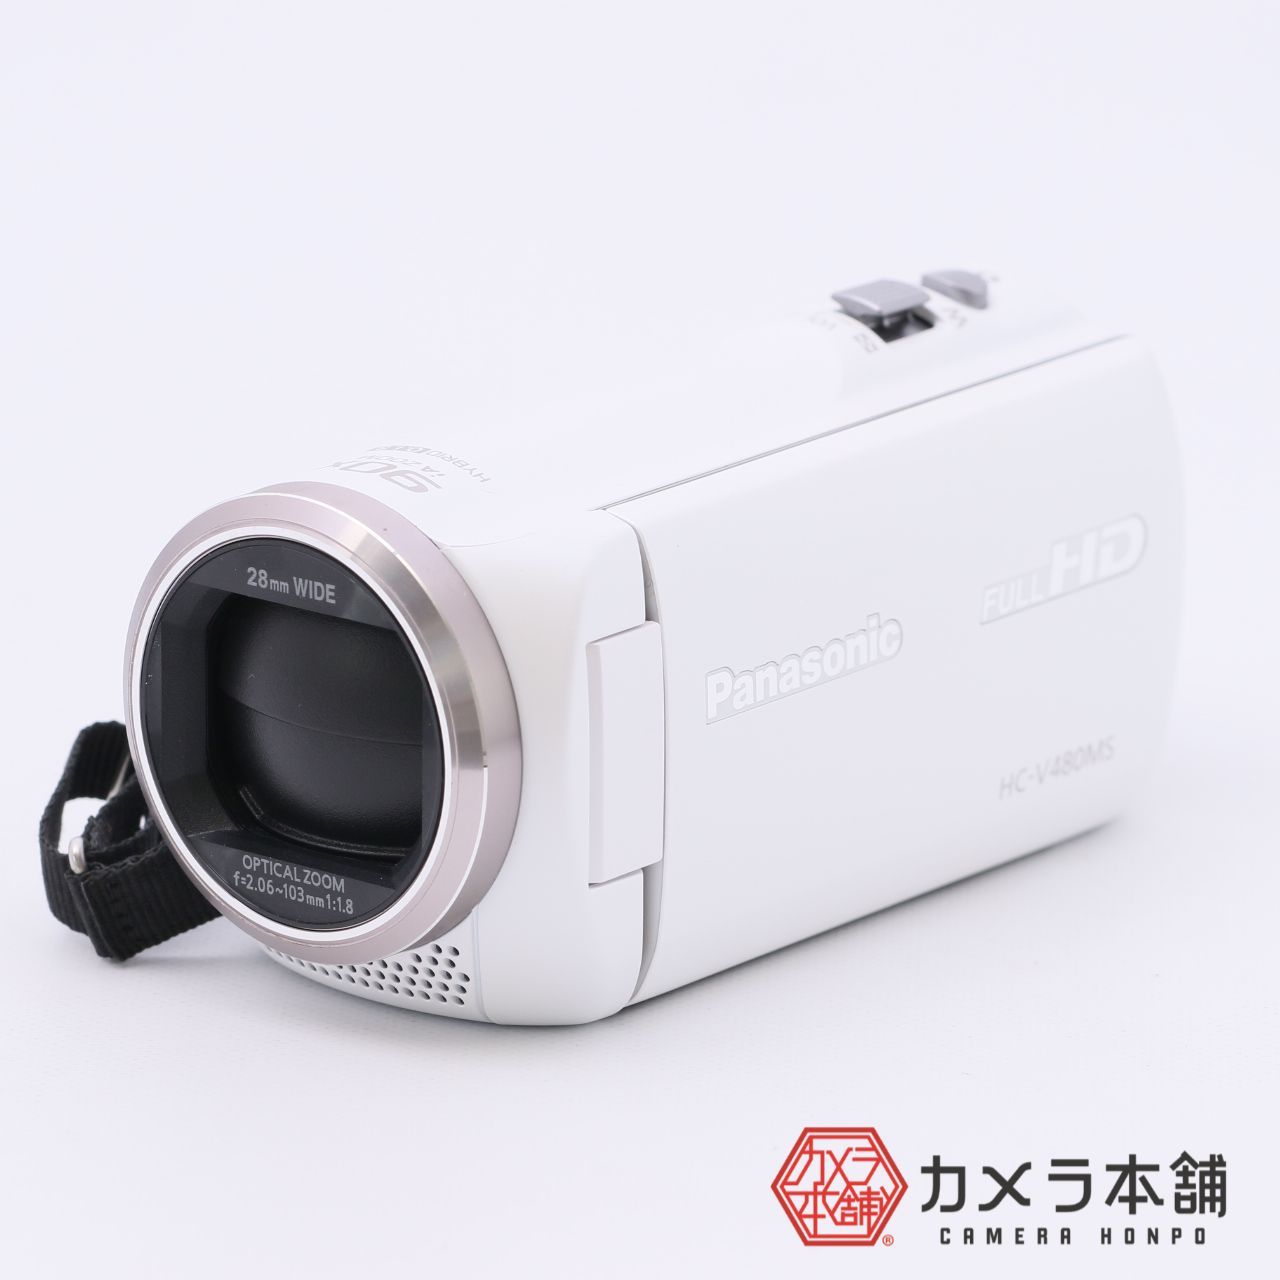 Panasonic HDビデオカメラ V480MS 32GB 高倍率90倍ズーム - カメラ本舗